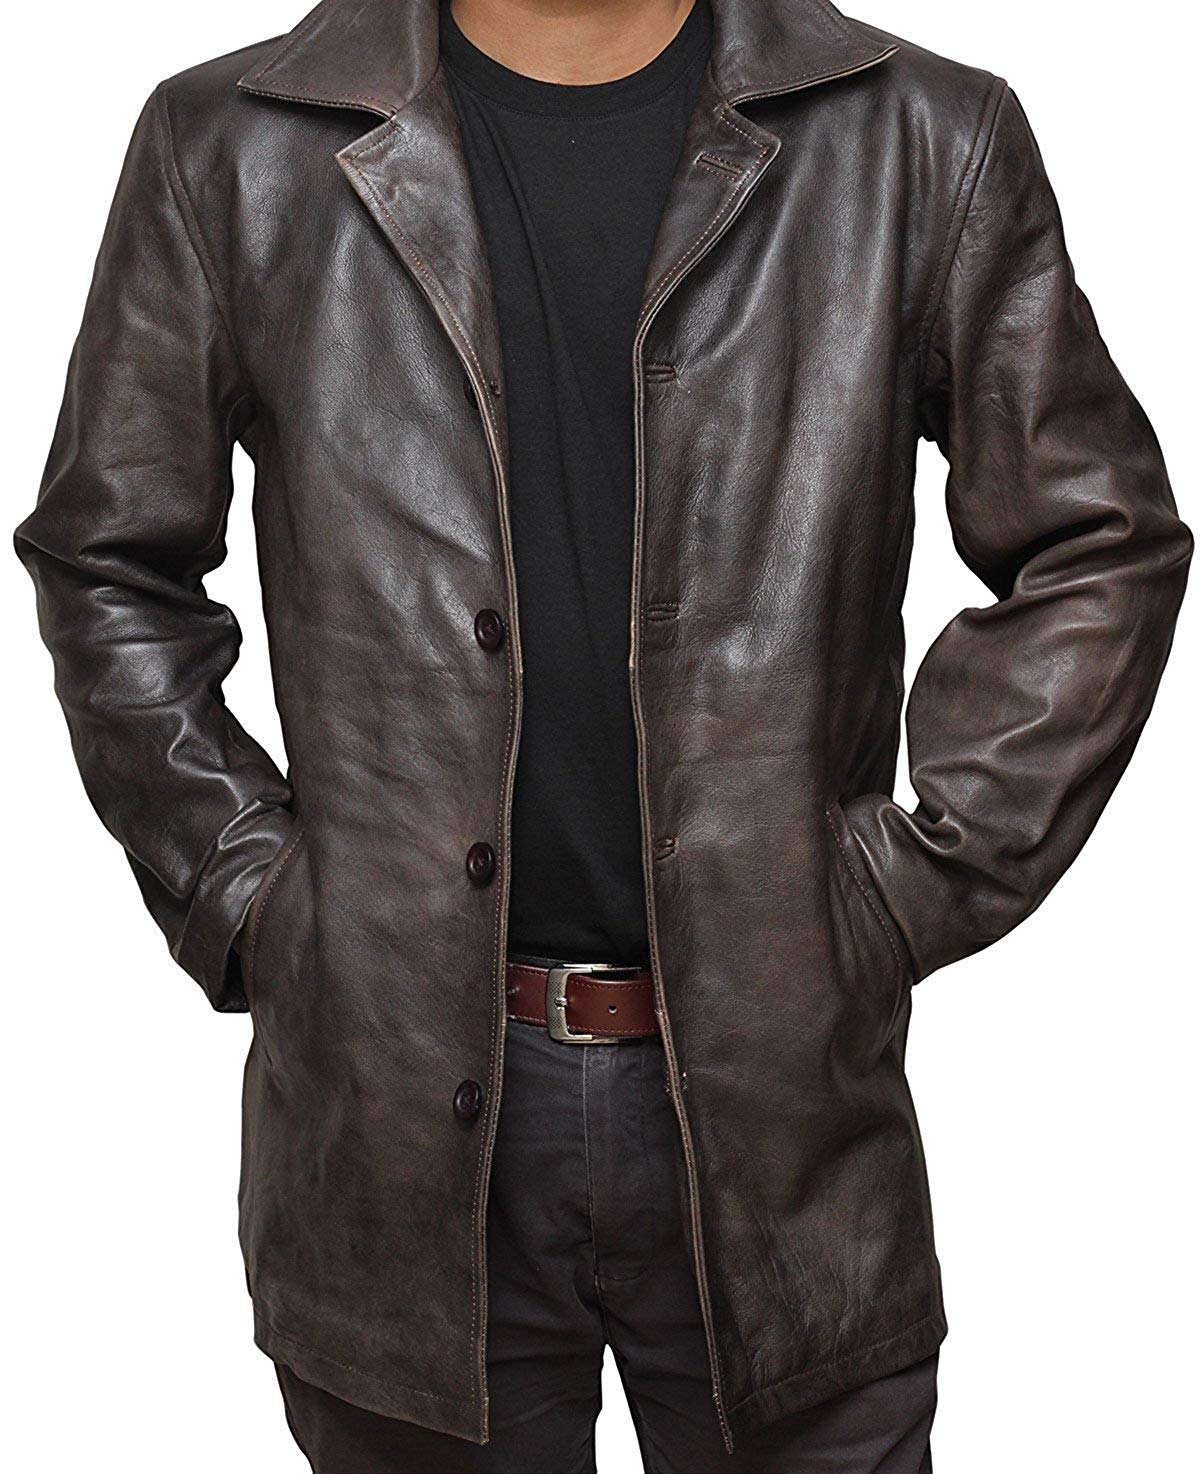 Stormwise Mens Fashion Bauer Real Leather Jack Jacket